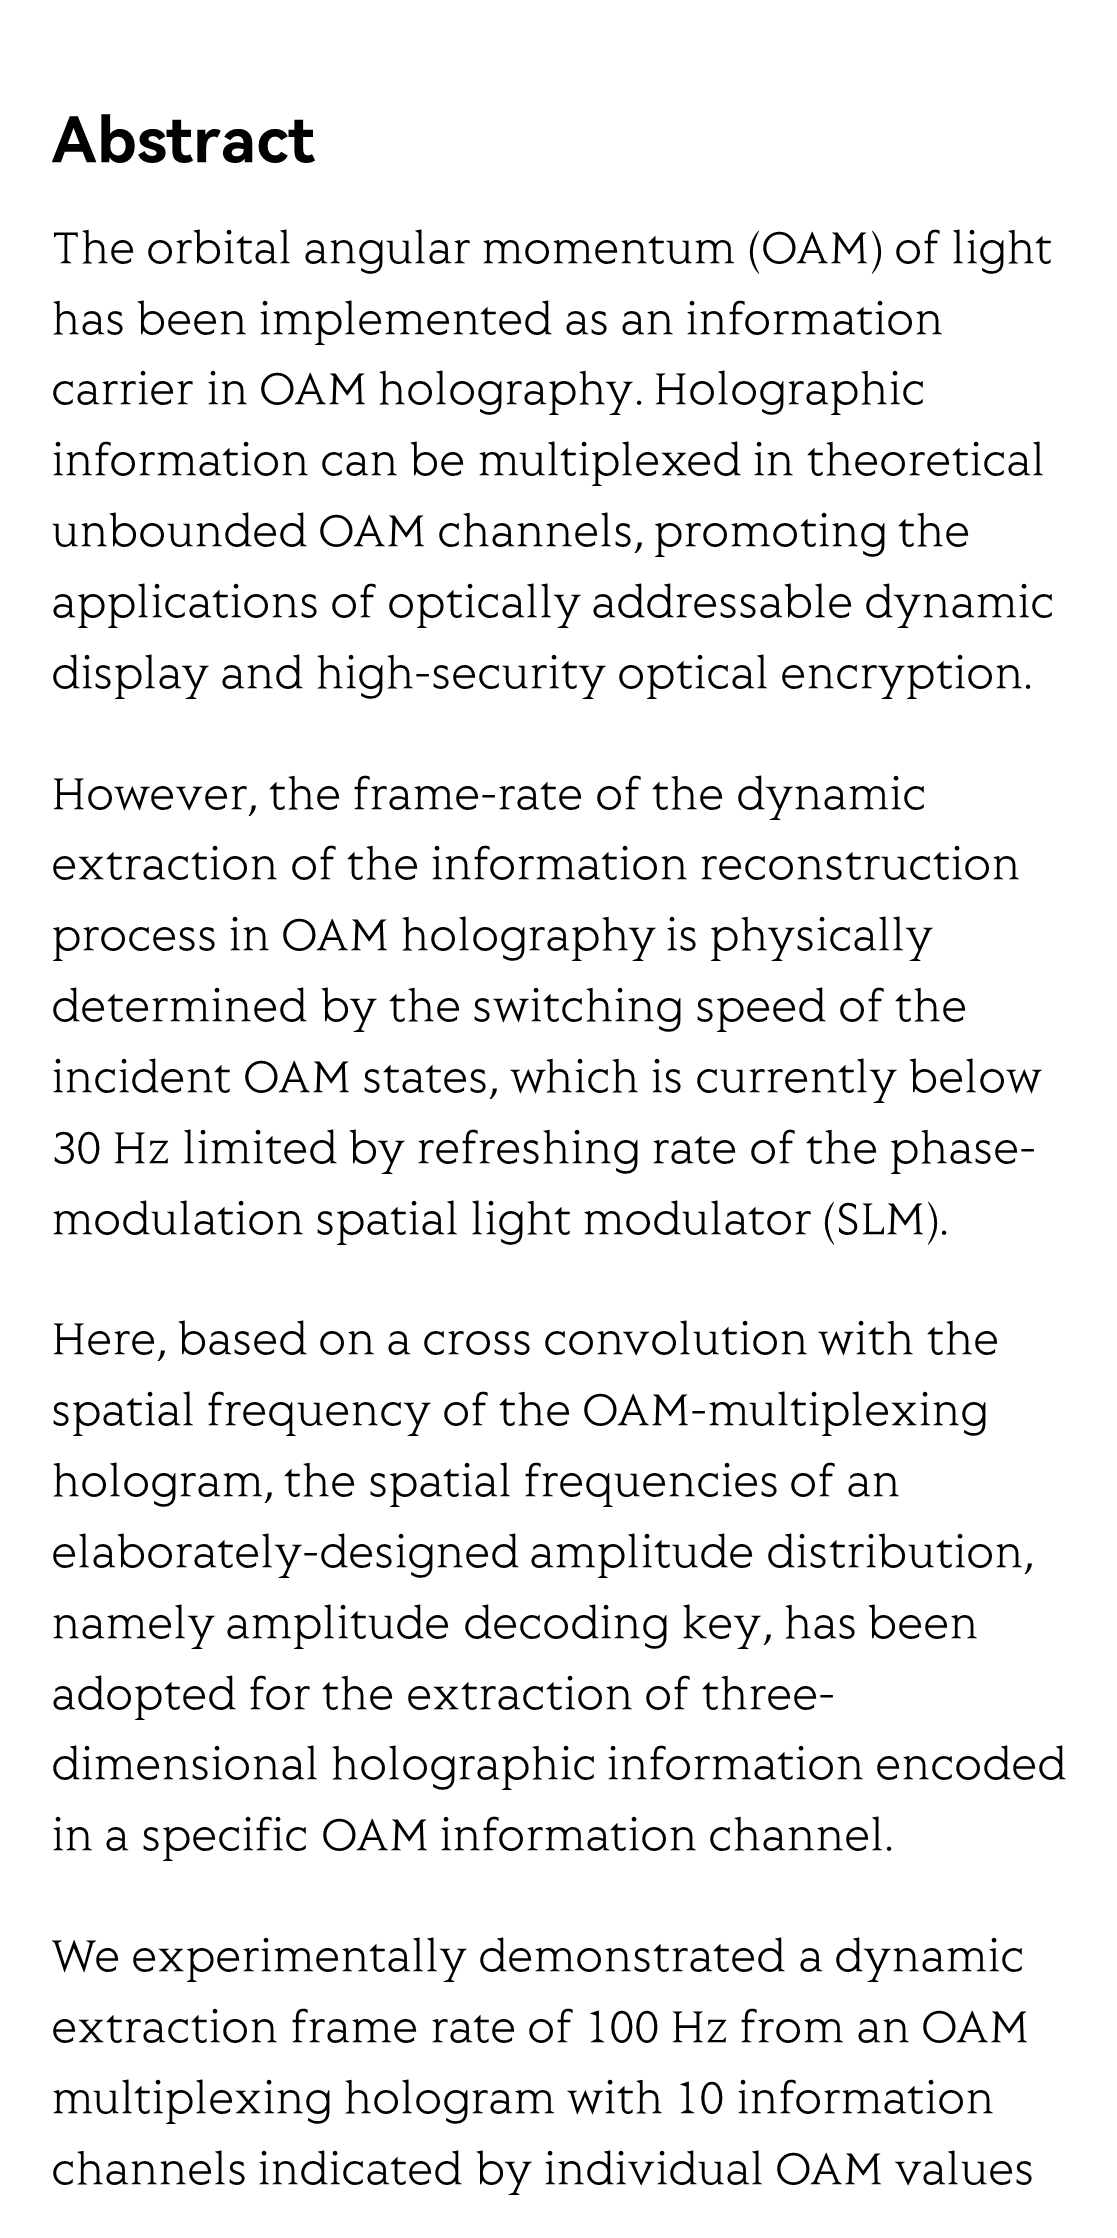 100 Hertz frame-rate switching three-dimensional orbital angular momentum multiplexing holography via cross convolution_2